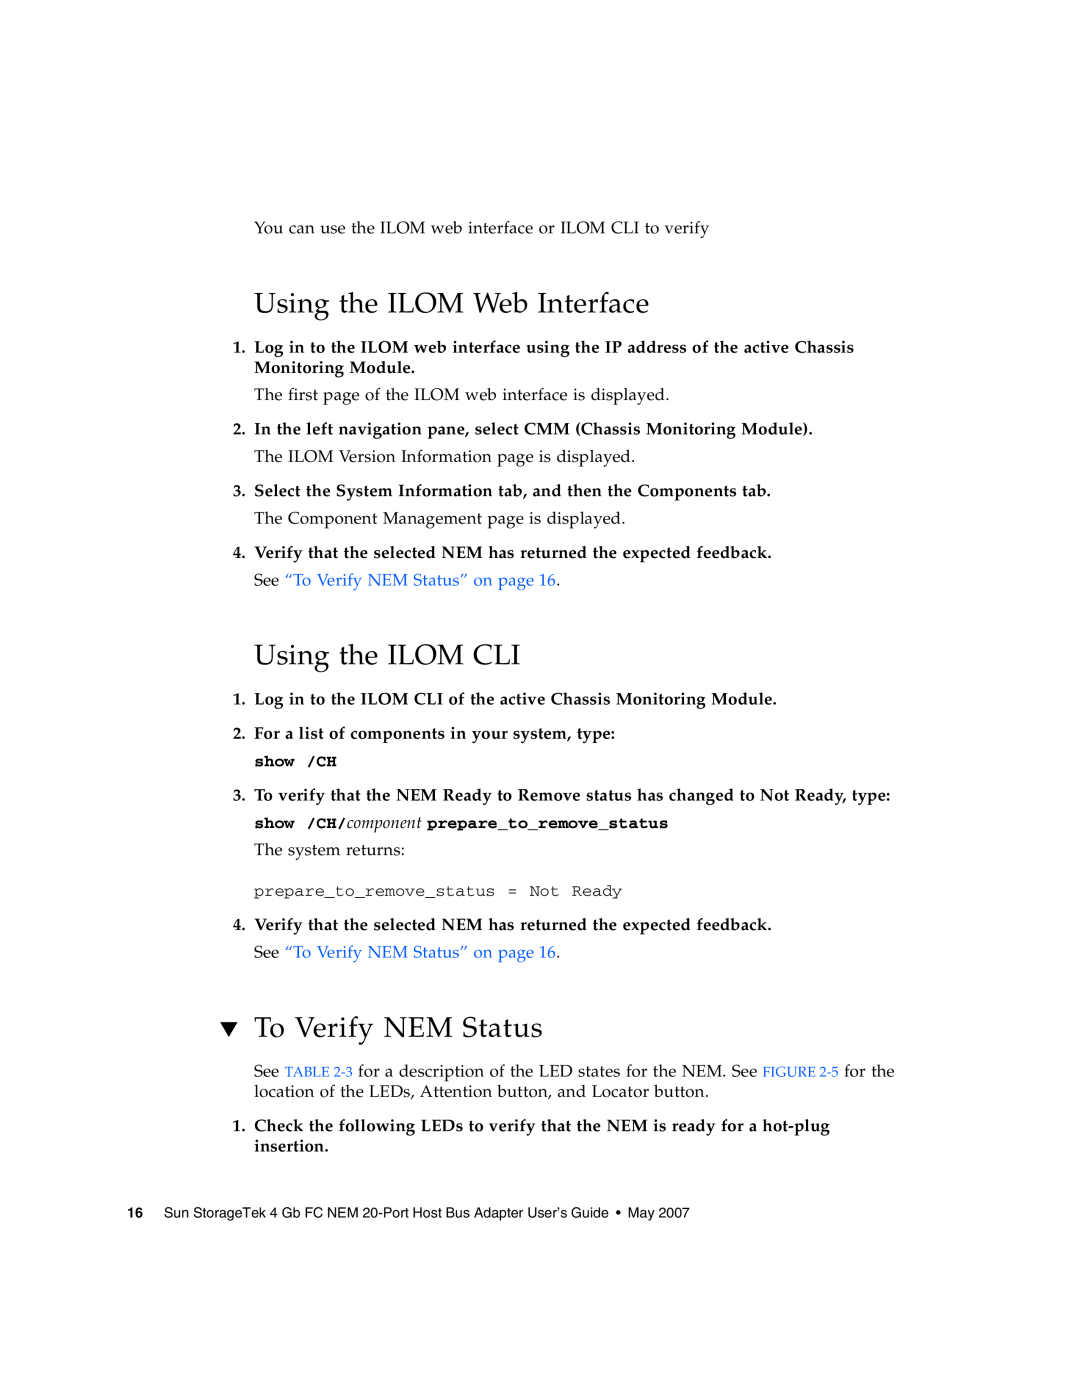 Sun Microsystems 2.0 manual Using the ILOM CLI, To Verify NEM Status, Using the ILOM Web Interface 